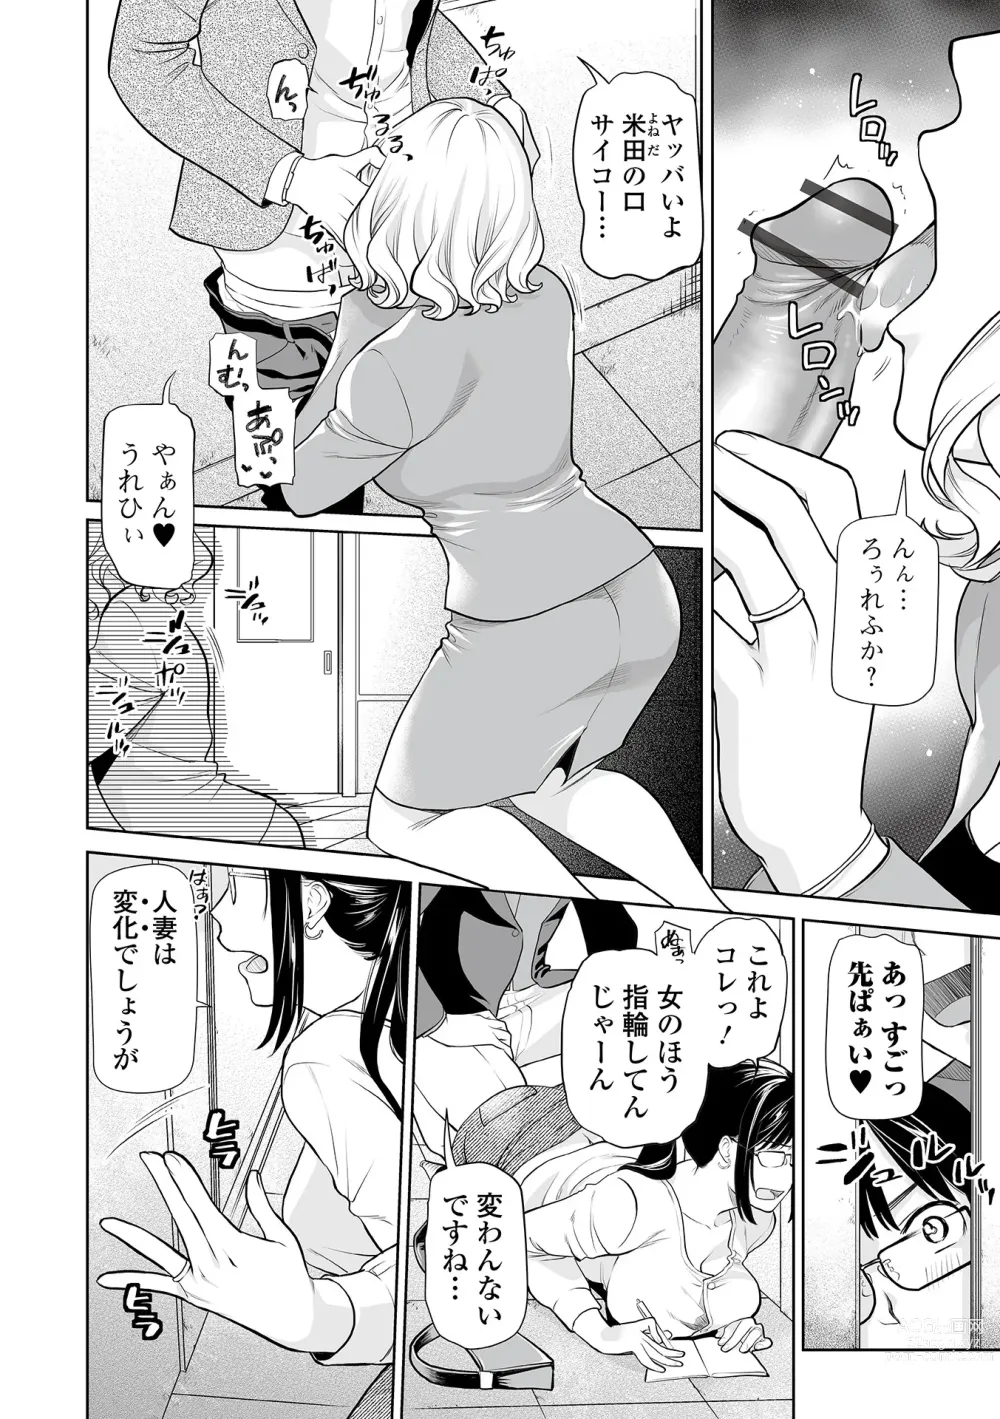 Page 4 of manga Web Comic Toutetsu Vol. 87